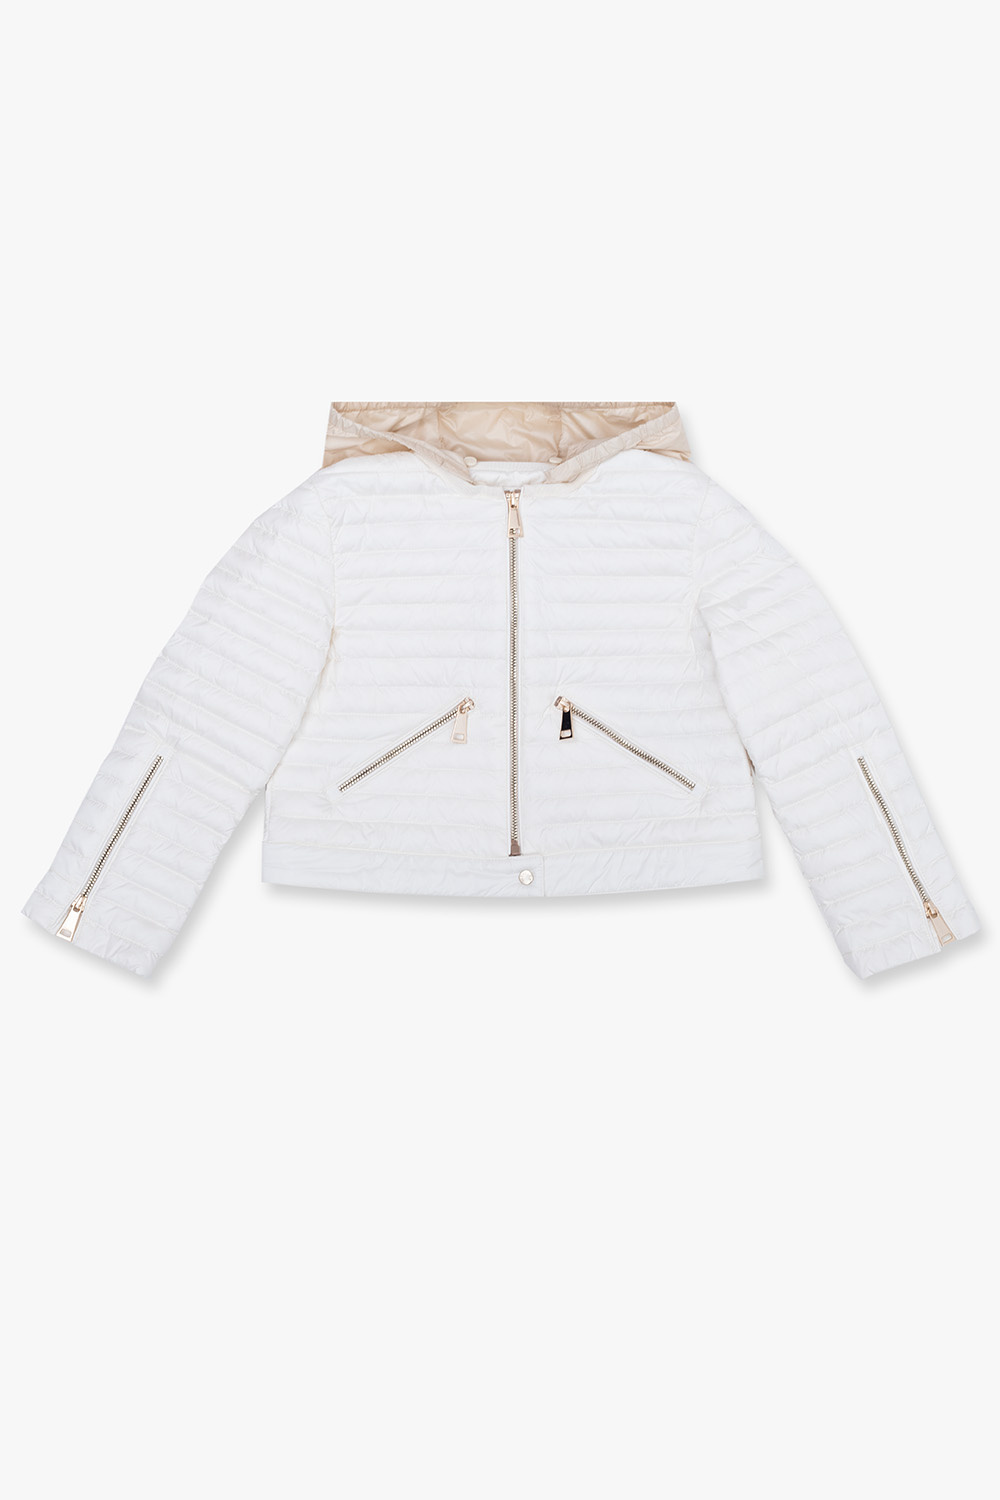 Moncler Enfant ‘Pourtet’ down jacket